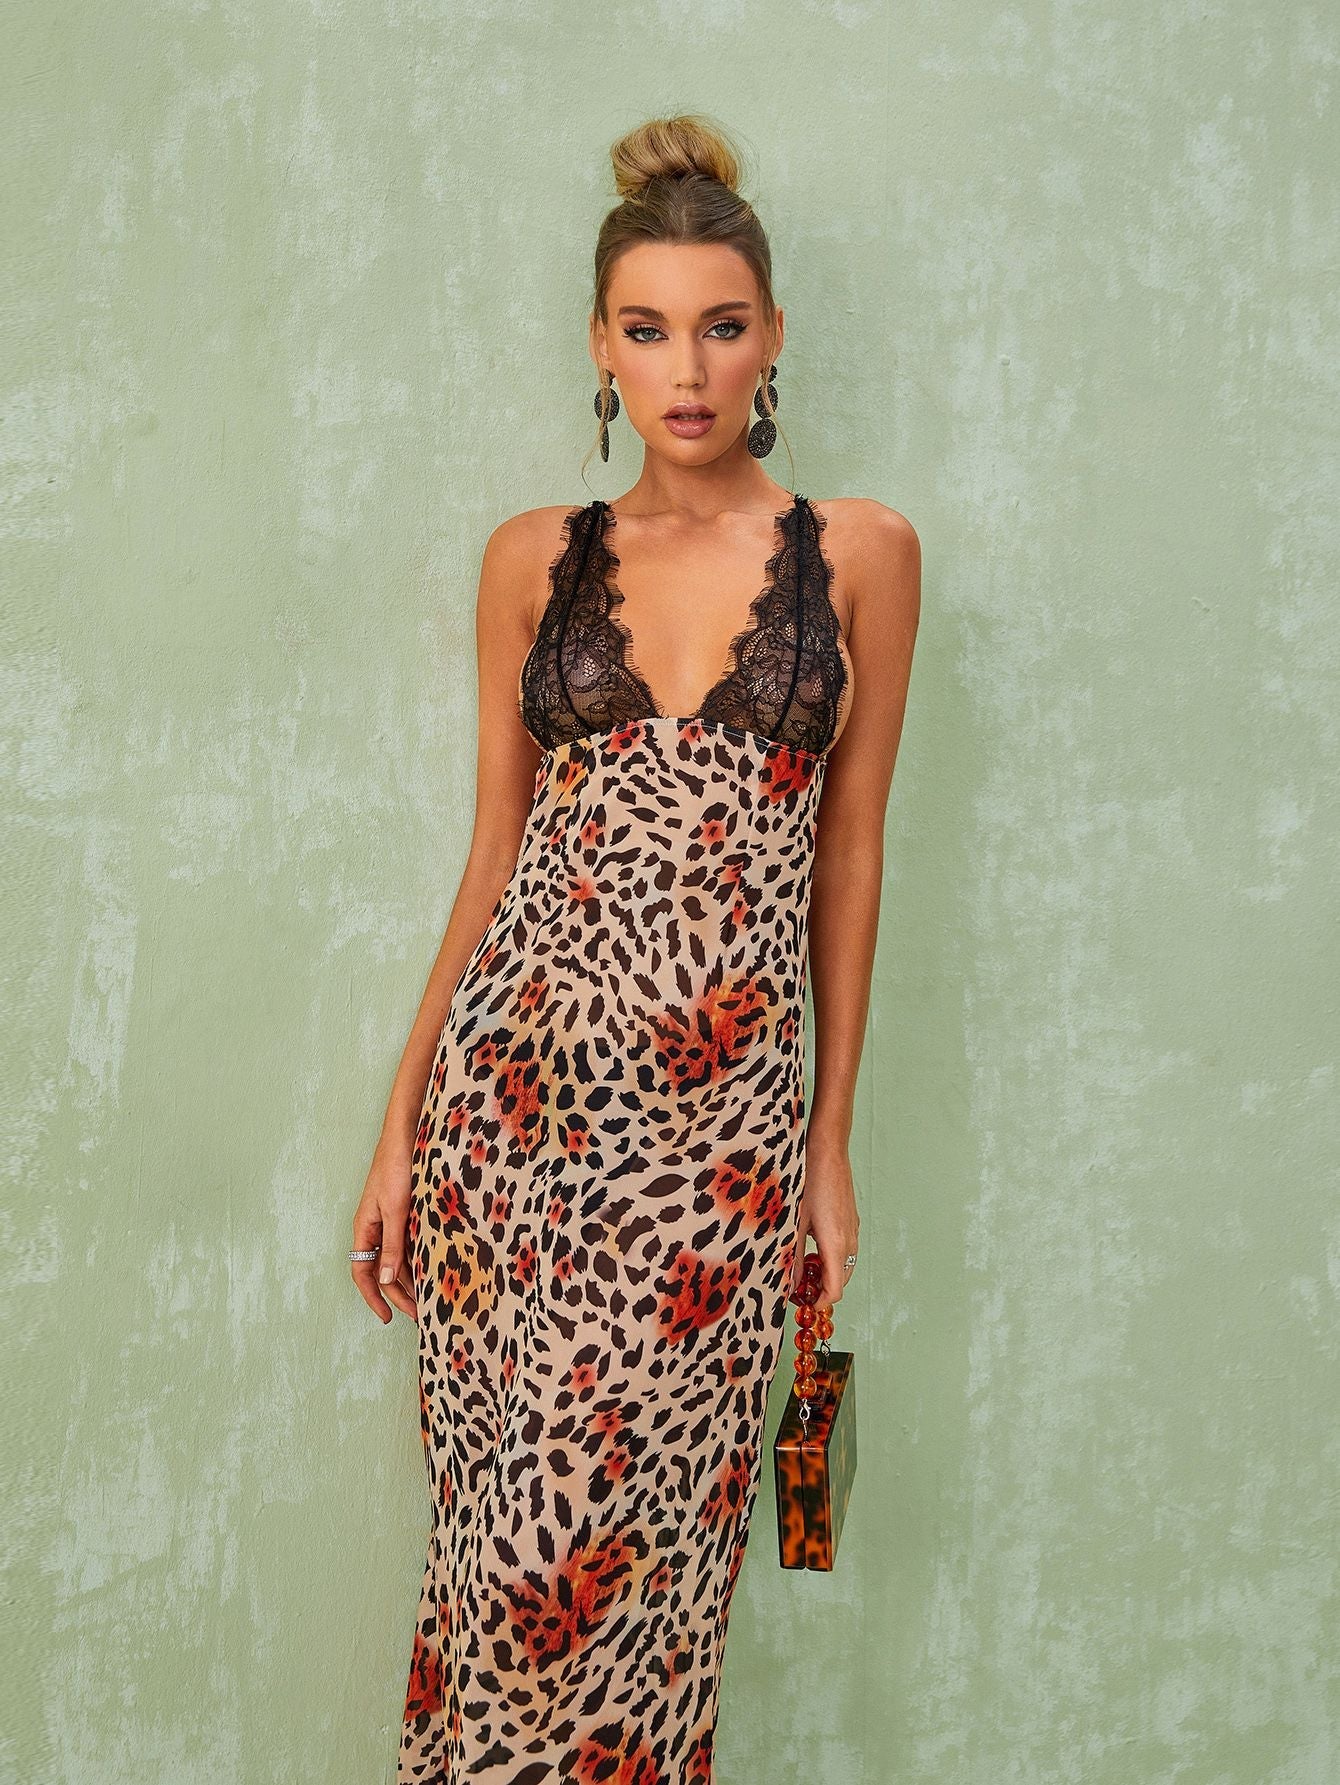 Svea Lace Leopard Printed Maxi Dress